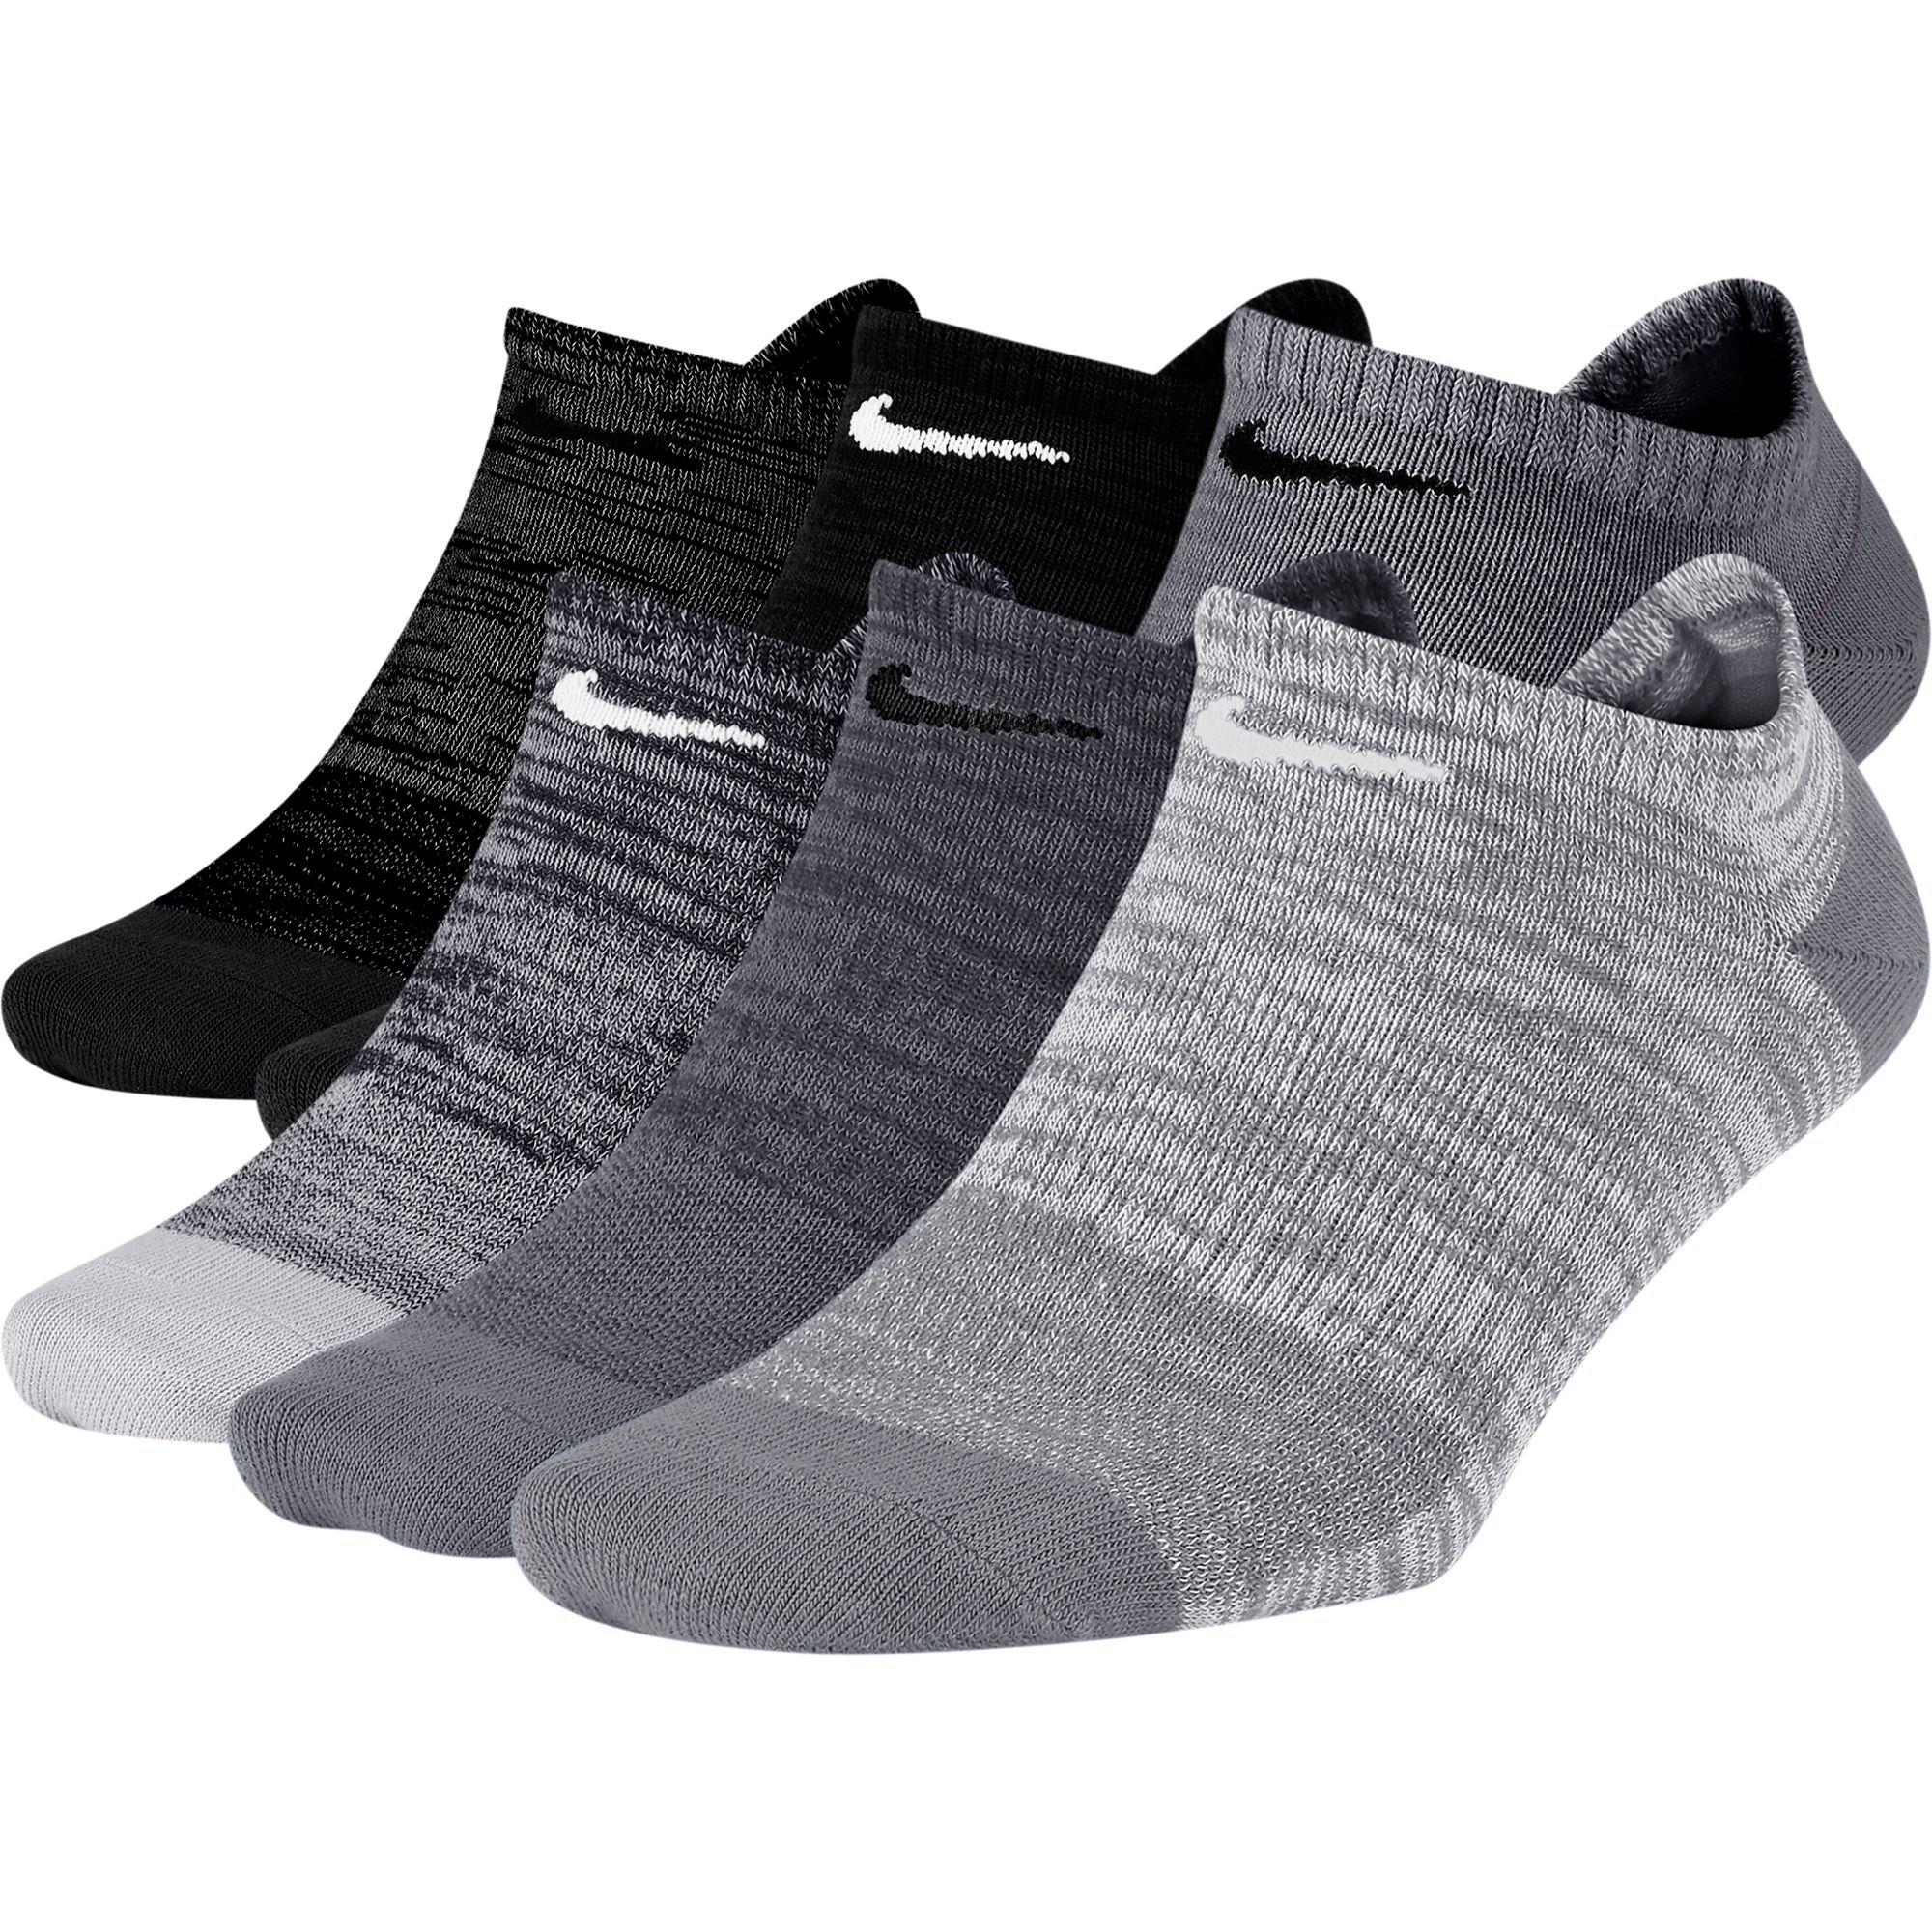 Nike Everyday Women's Lightweight No-Show Training Socks (6 Pairs) -  Assorted